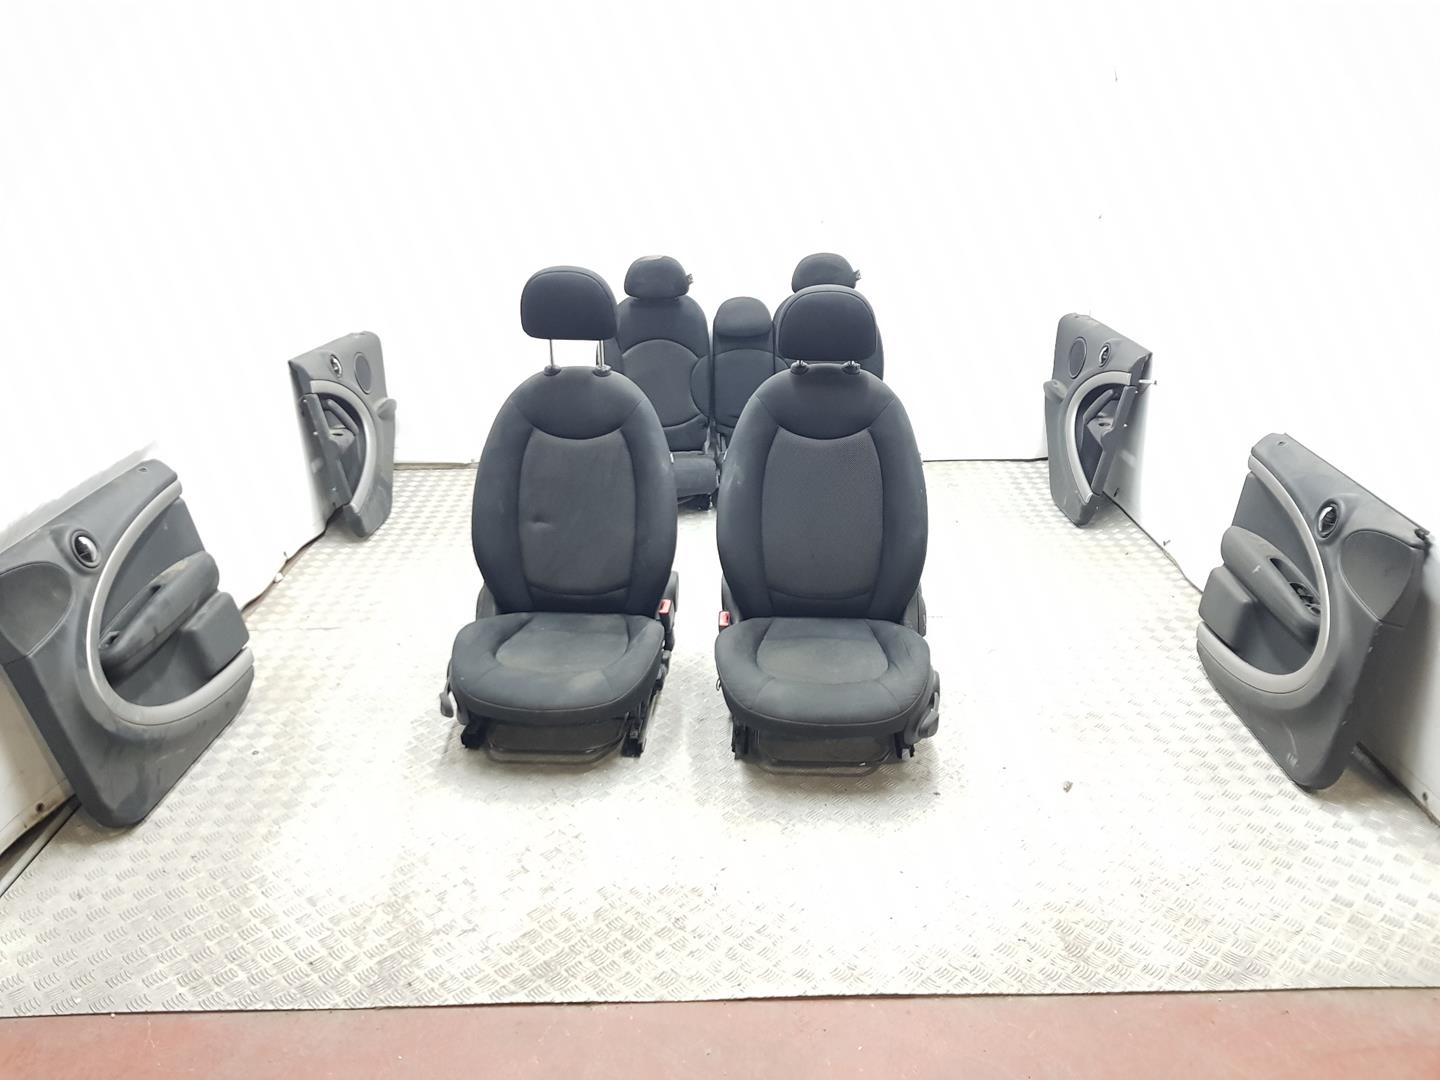 MINI Cooper R56 (2006-2015) Seats ASIENTOTELA, ASIENTOSMANUALES, CONPANELES 19805168